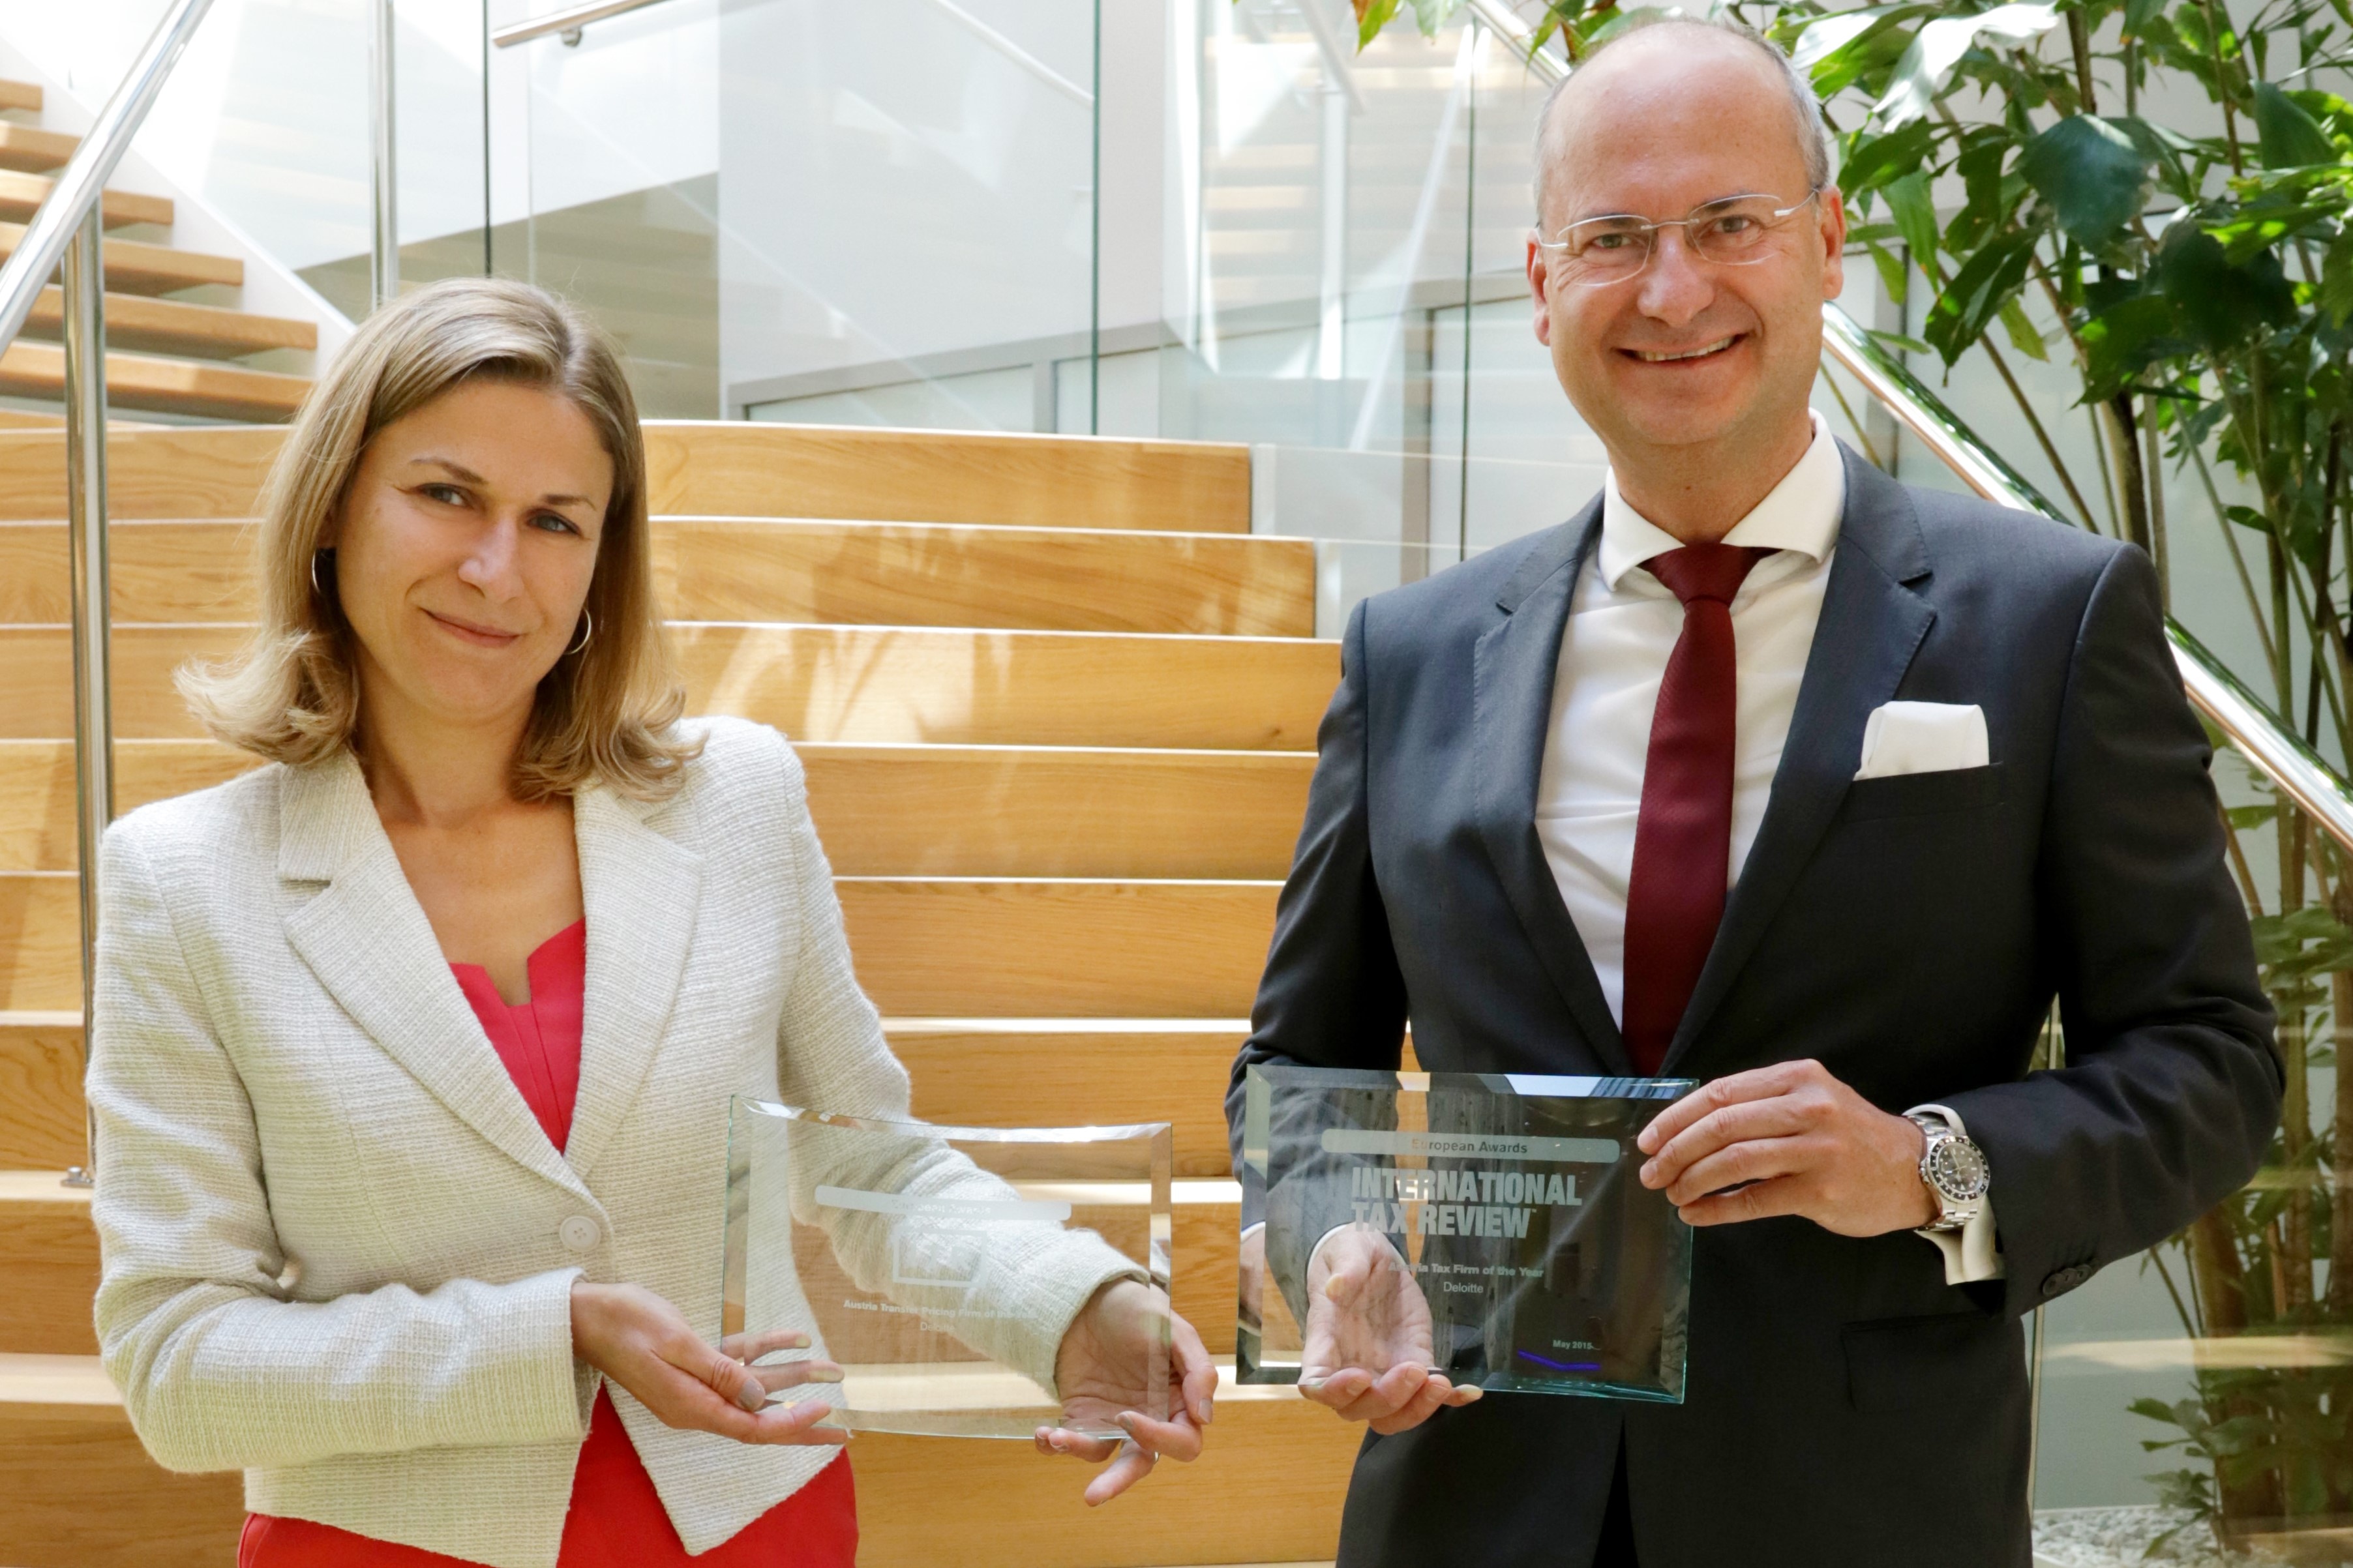 Karin Andorfer, Partnerin Deloitte Österreich, und Herbert Kovar, Partner Deloitte Österreich, bei der Tax Awards Preisverleihung